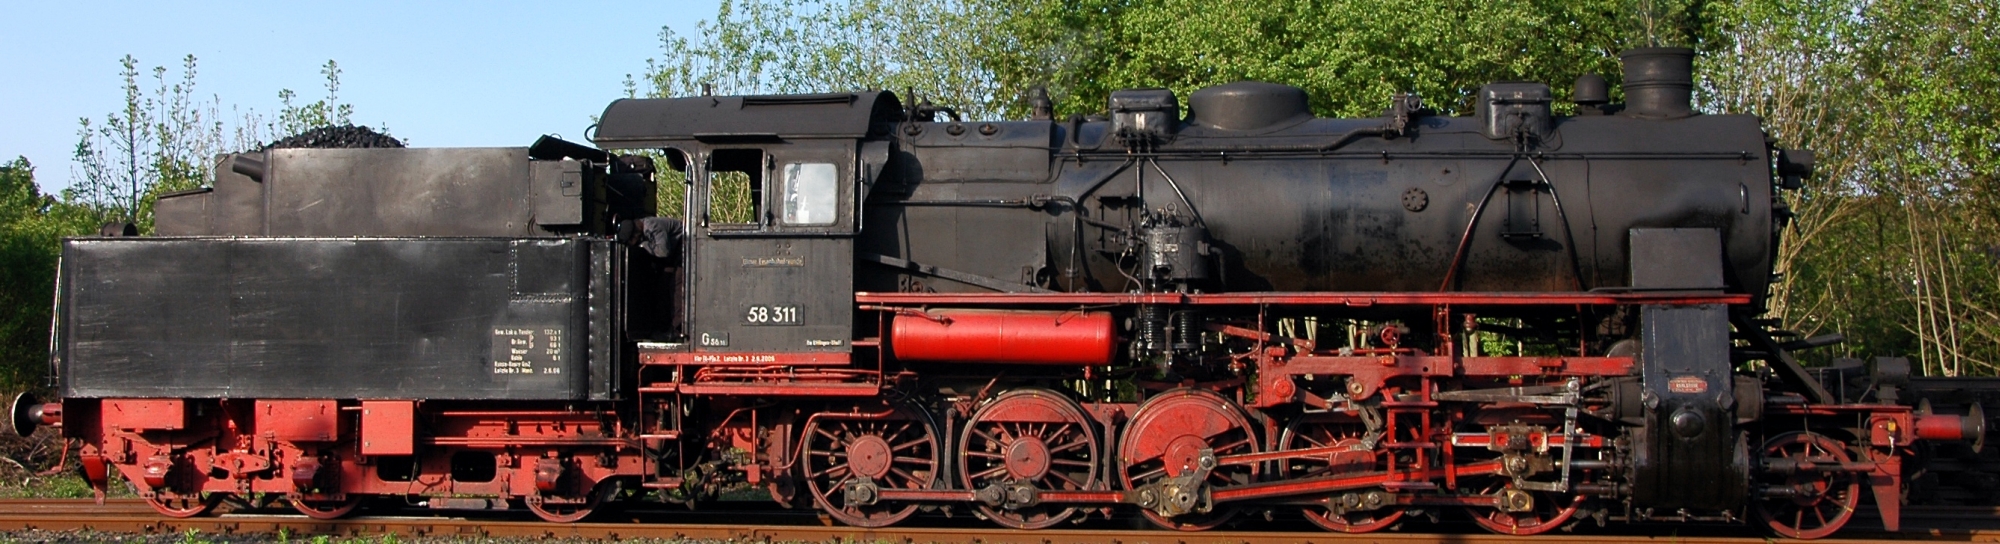 58 311 of the Ulmer Eisenbahnfreunde preserved in working order in May 2010 in Neuenmarkt-Wirsberg